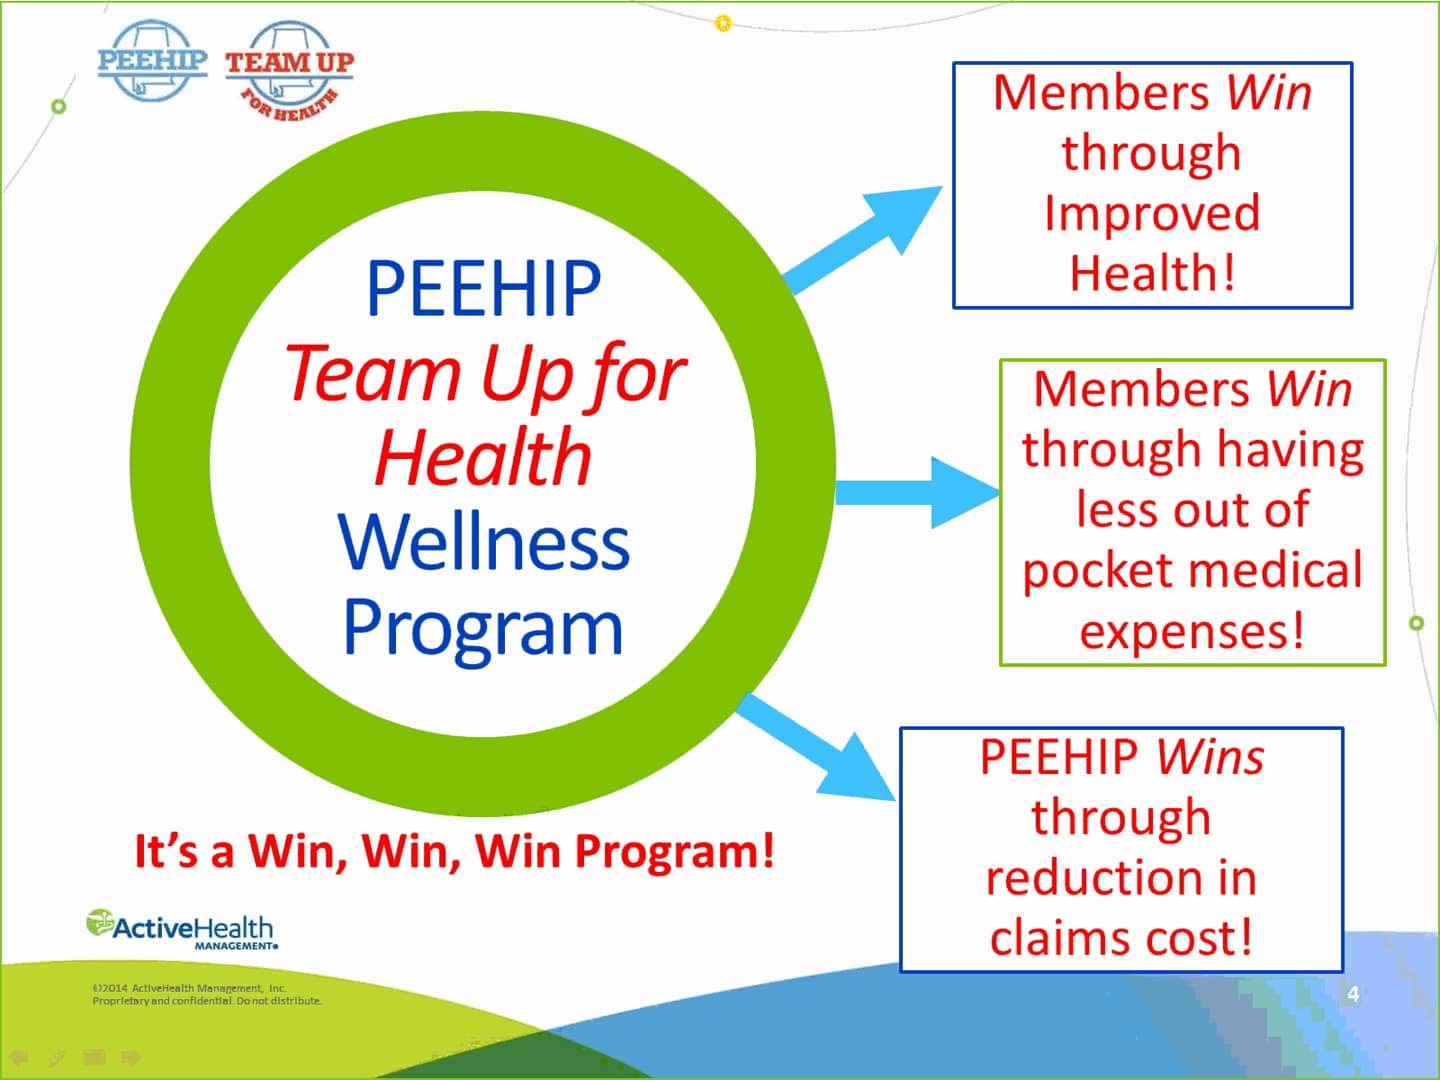 PEEHIP Wellness Program Webinar Video on Vimeo